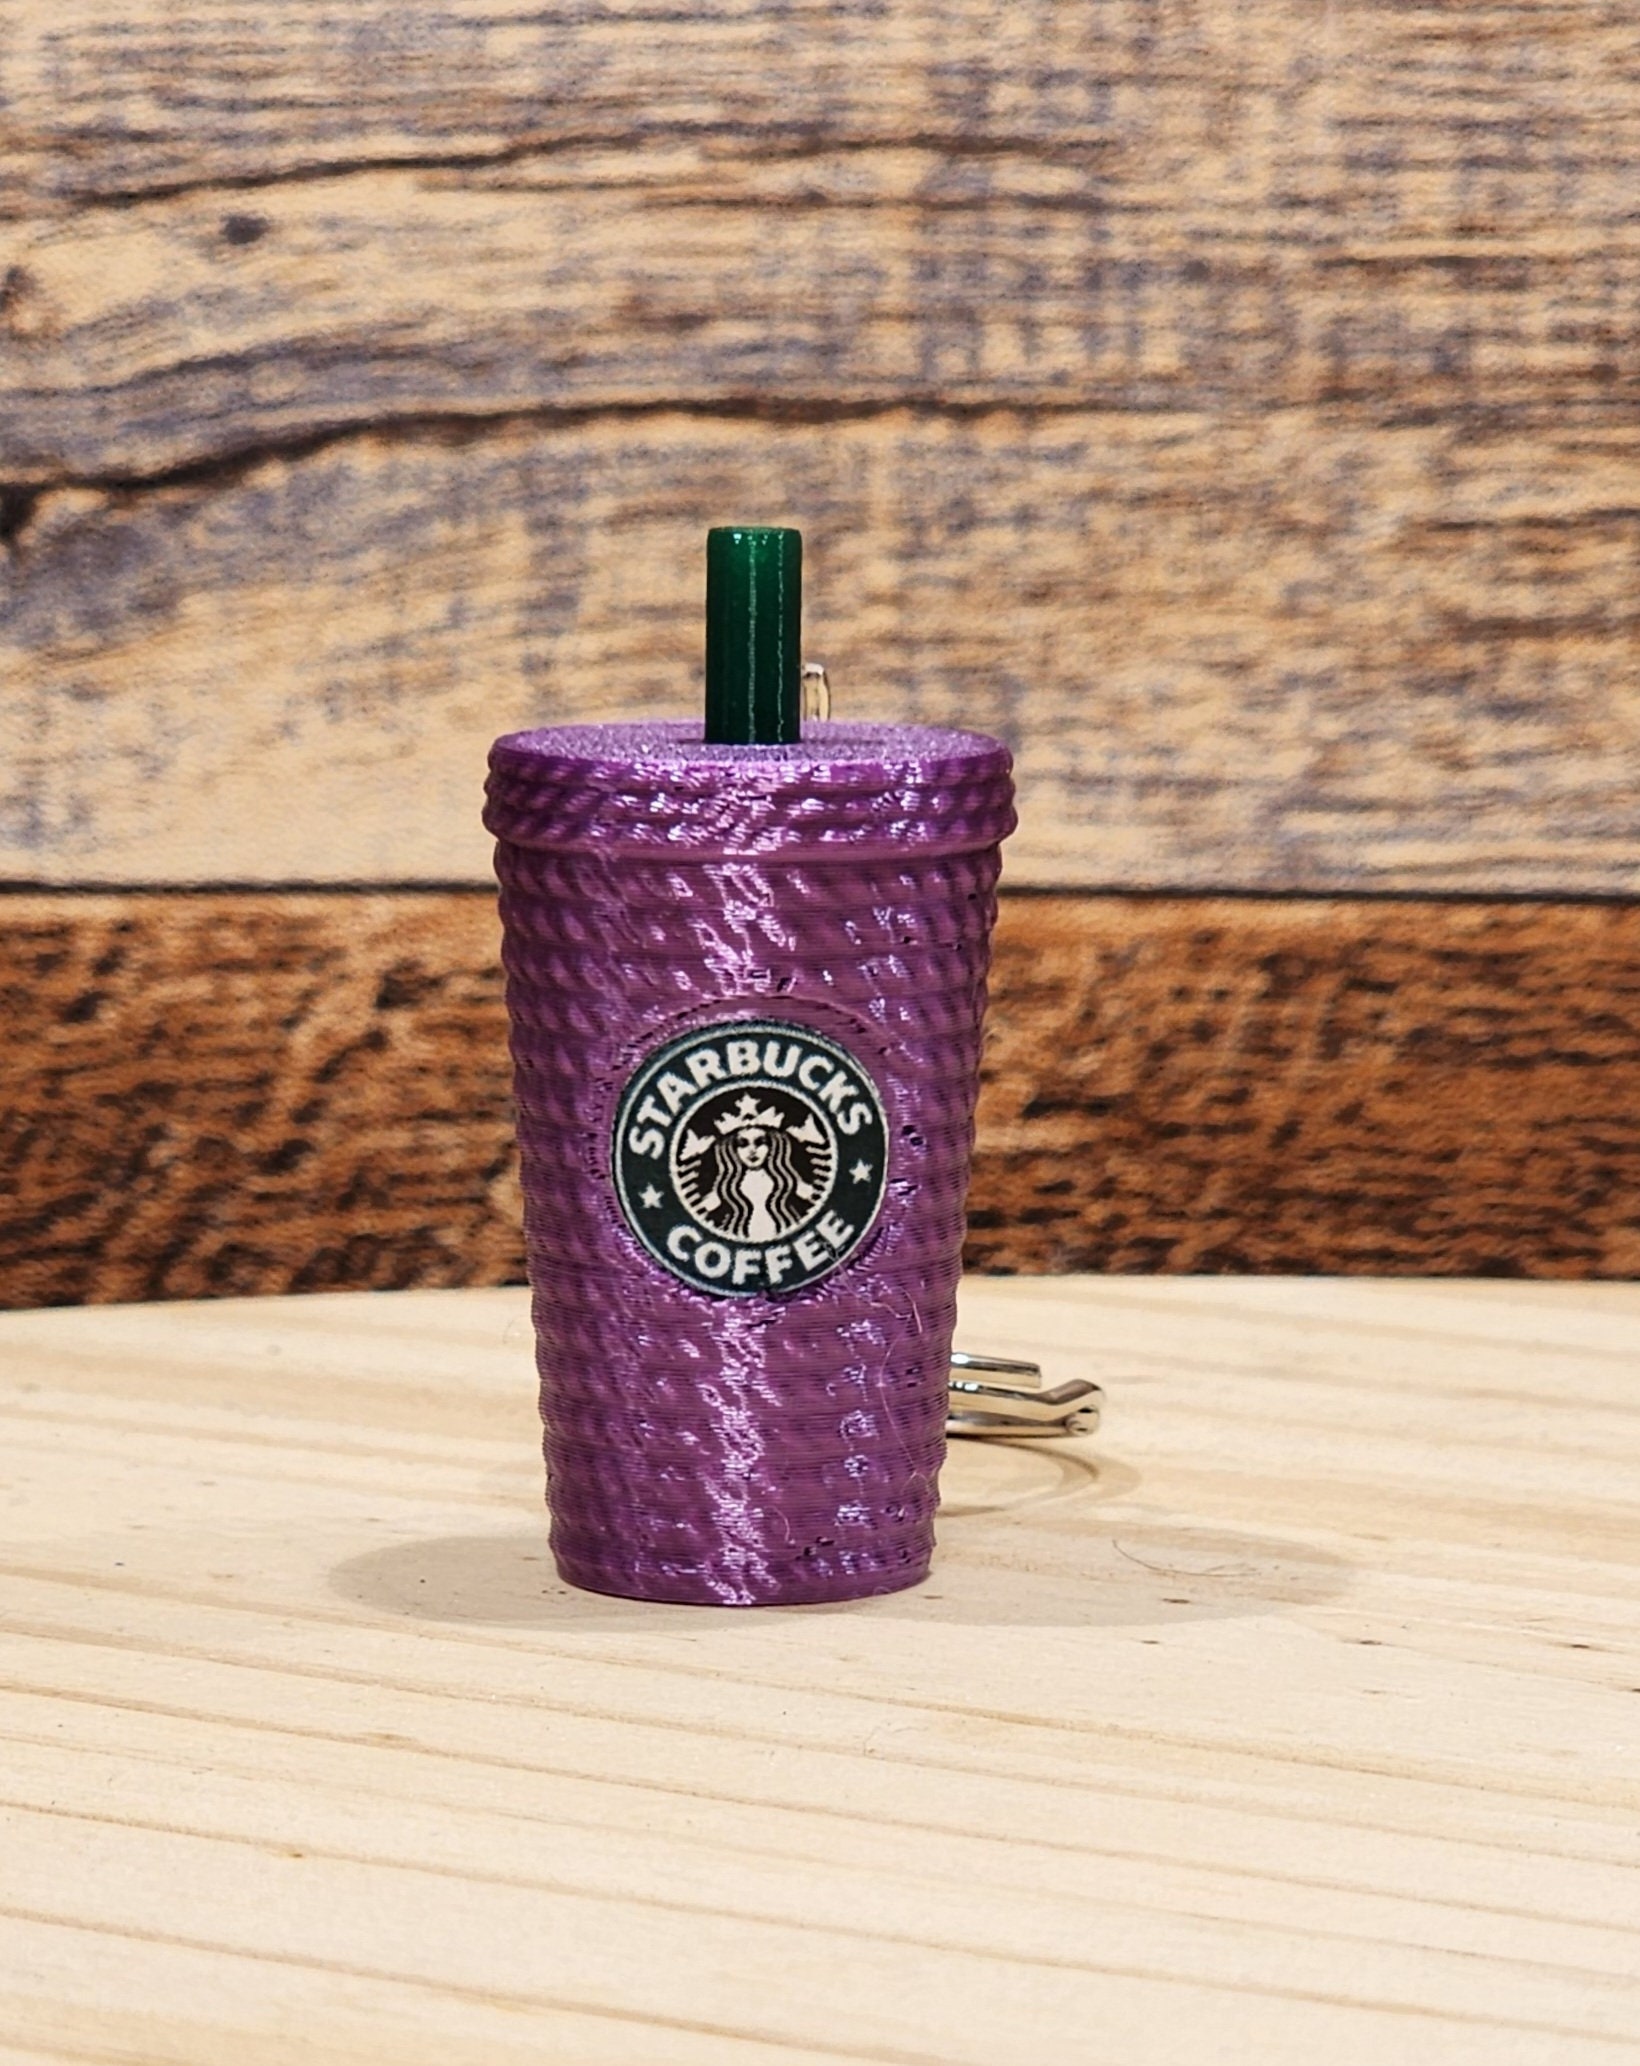 You Can Buy Mini Studded Starbucks Tumbler Key Chains